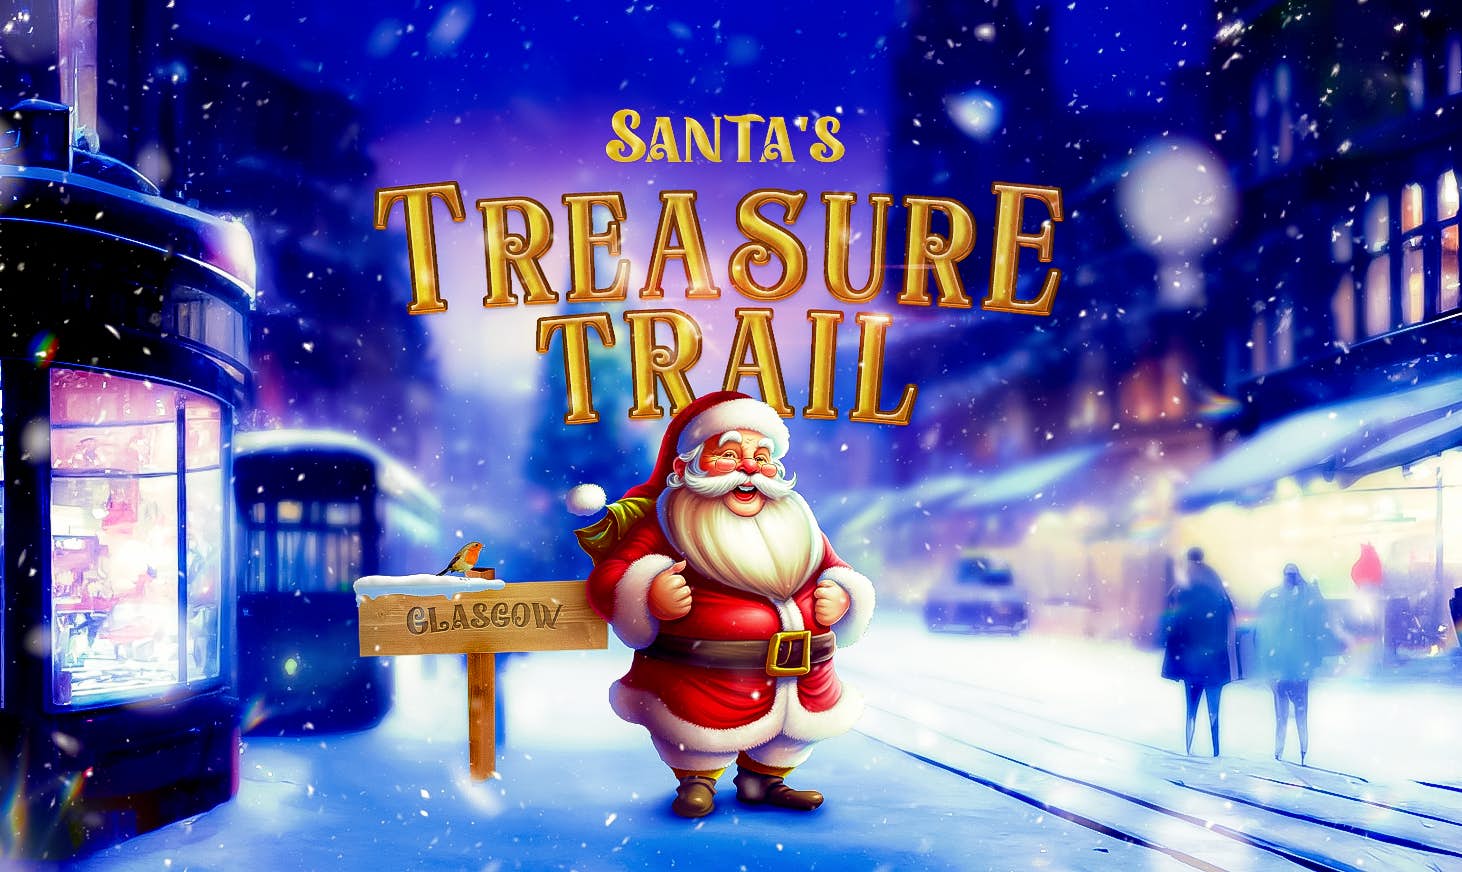 Santa's Treasure Trail: Glasgow image